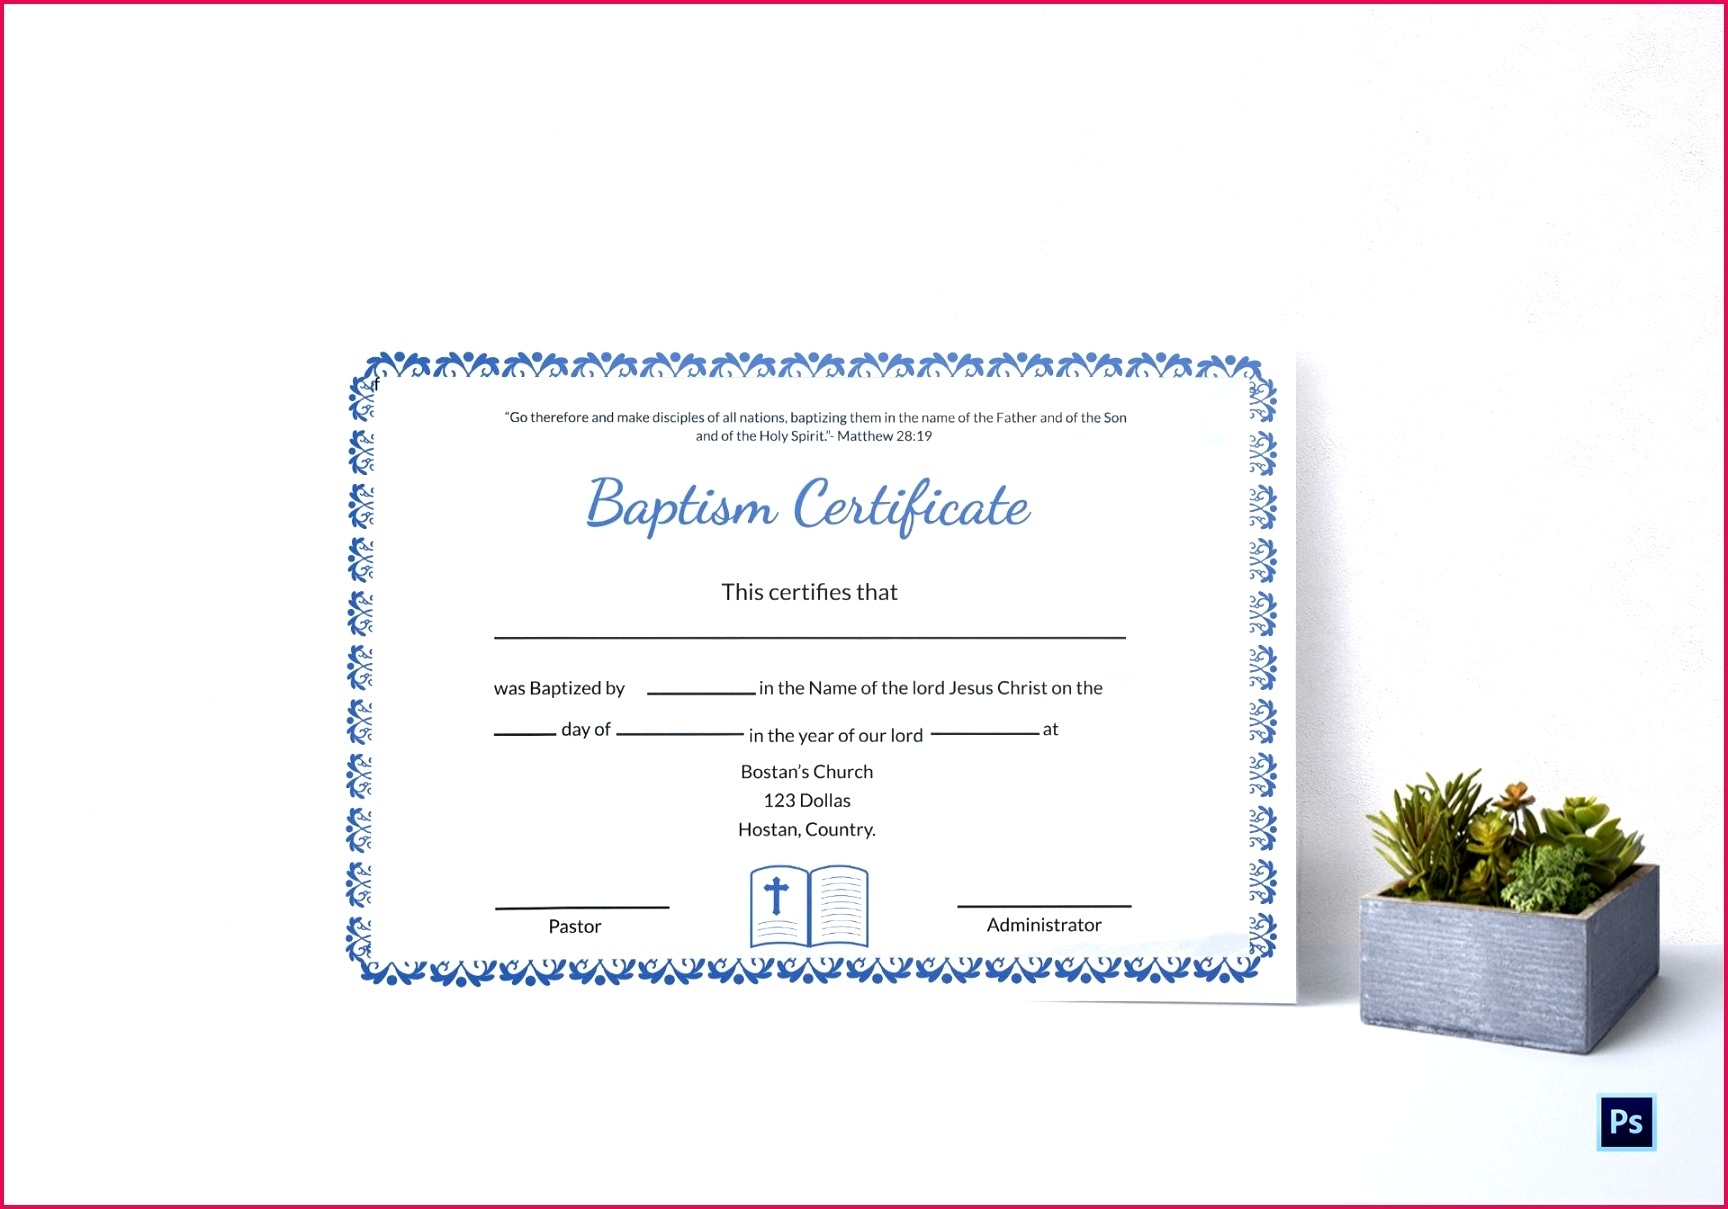 6 Baptism Certificate Templates Word 64746 | Fabtemplatez Within Baptism Certificate Template Word